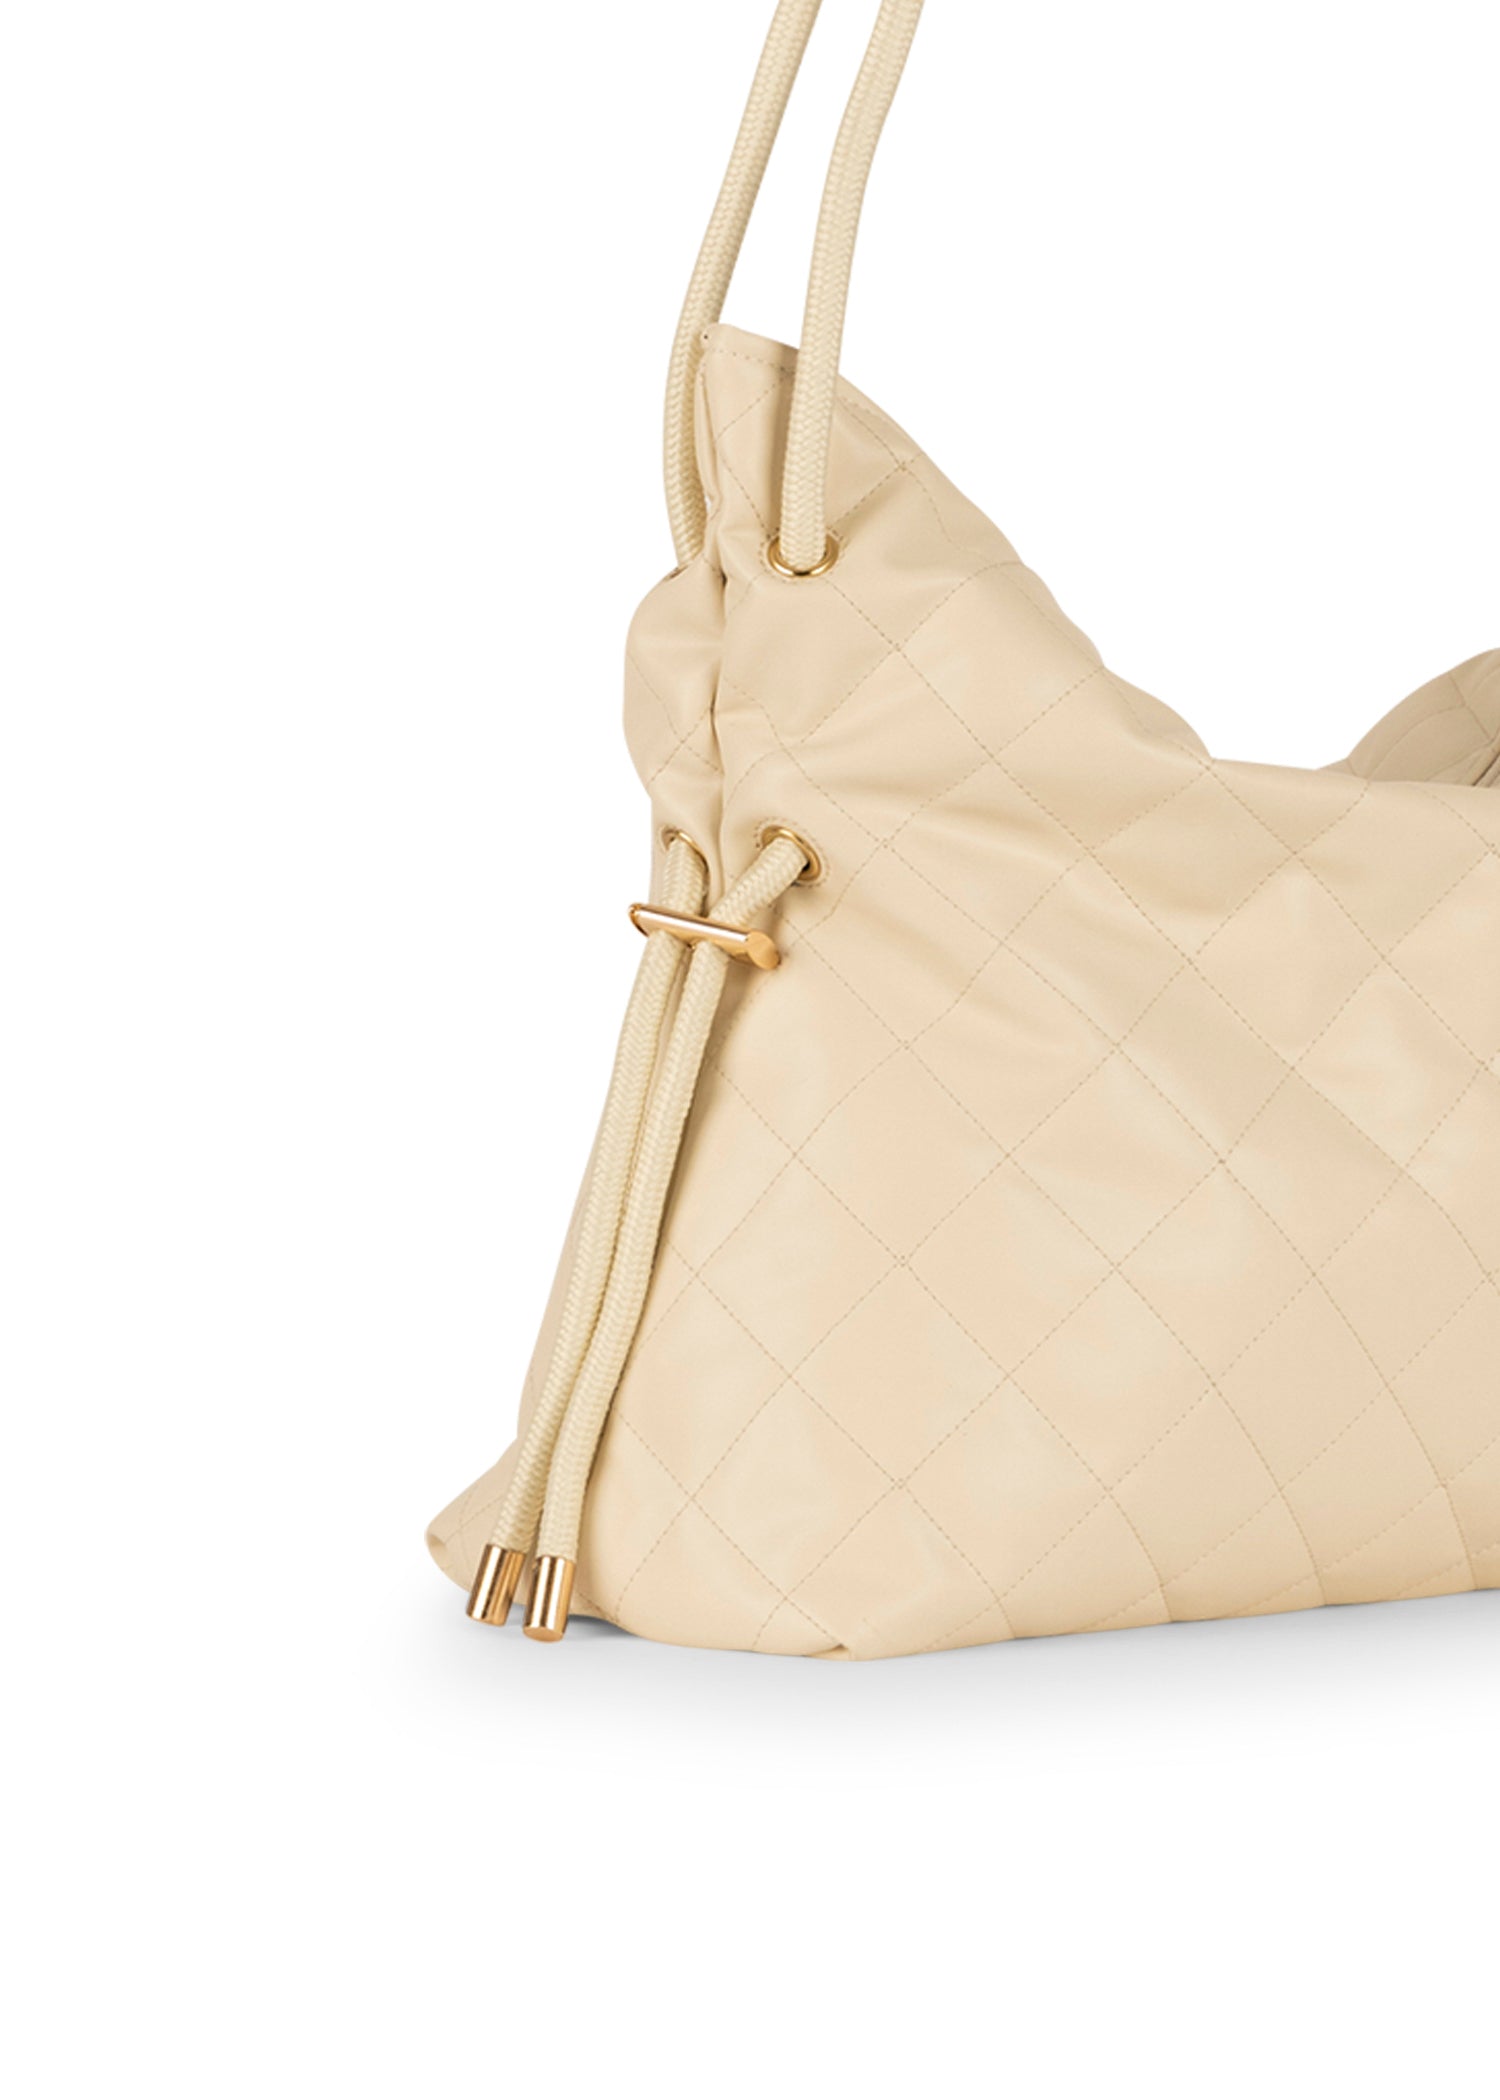 Stacey Vanilla Convertible Shoulder Bag